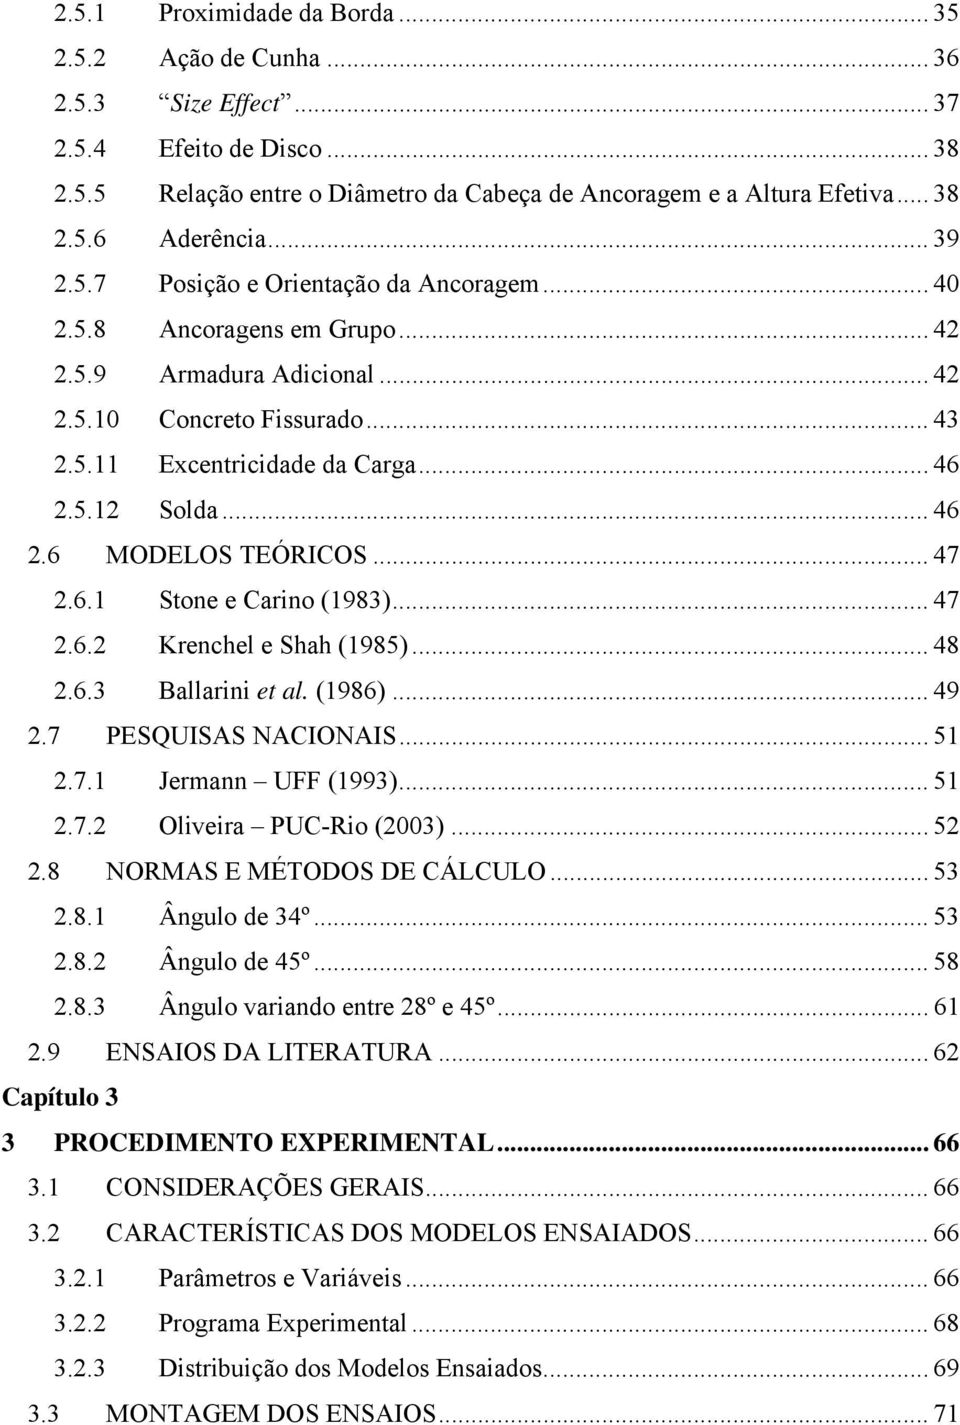 .. 46 2.6 MODELOS TEÓRICOS... 47 2.6.1 Stone e Carino (1983)... 47 2.6.2 Krenchel e Shah (1985)... 48 2.6.3 Ballarini et al. (1986)... 49 2.7 PESQUISAS NACIONAIS... 51 2.7.1 Jermann UFF (1993)... 51 2.7.2 Oliveira PUC-Rio (23).